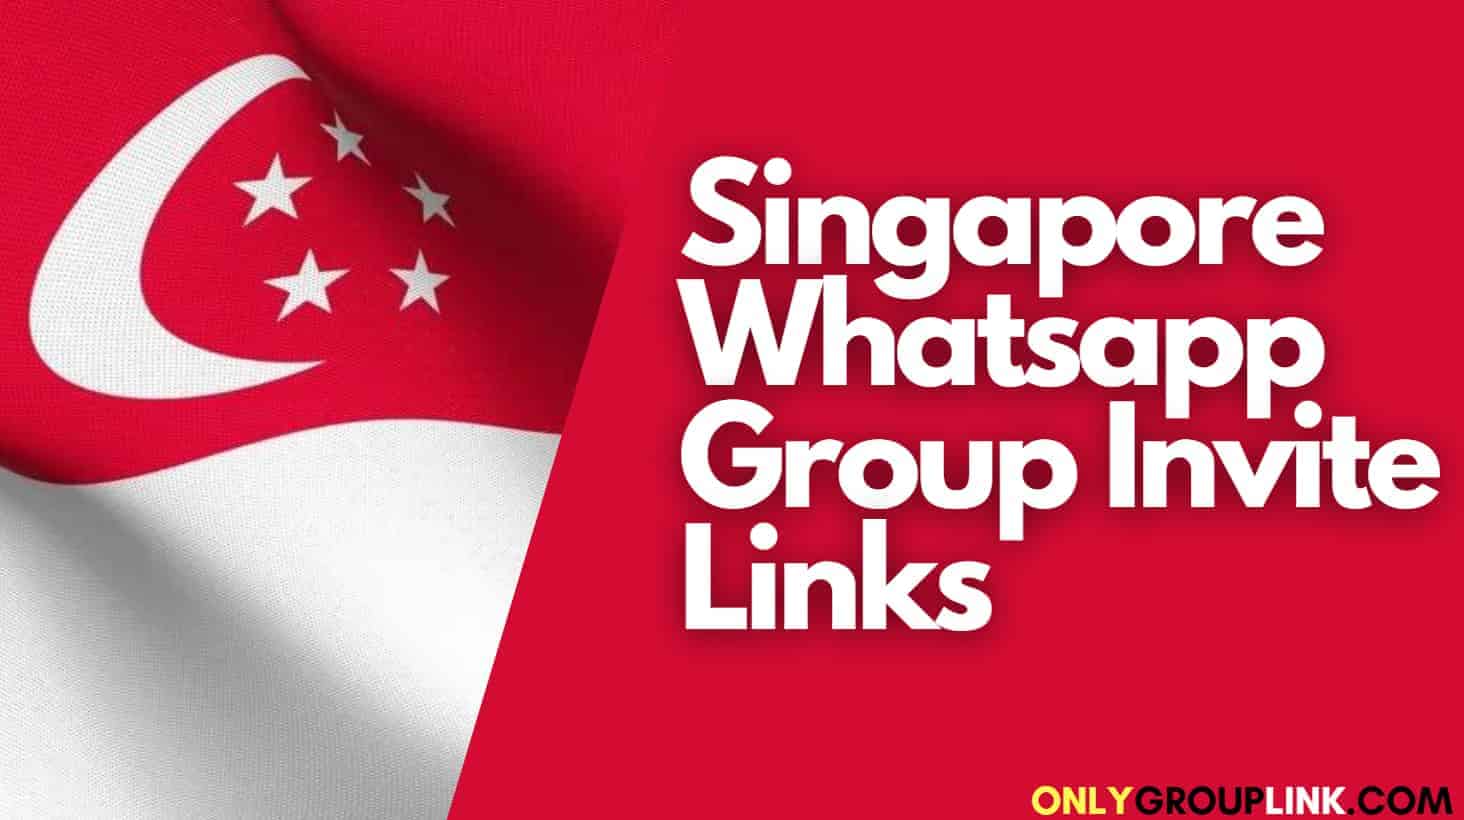 Singapore Whatsapp Group Links